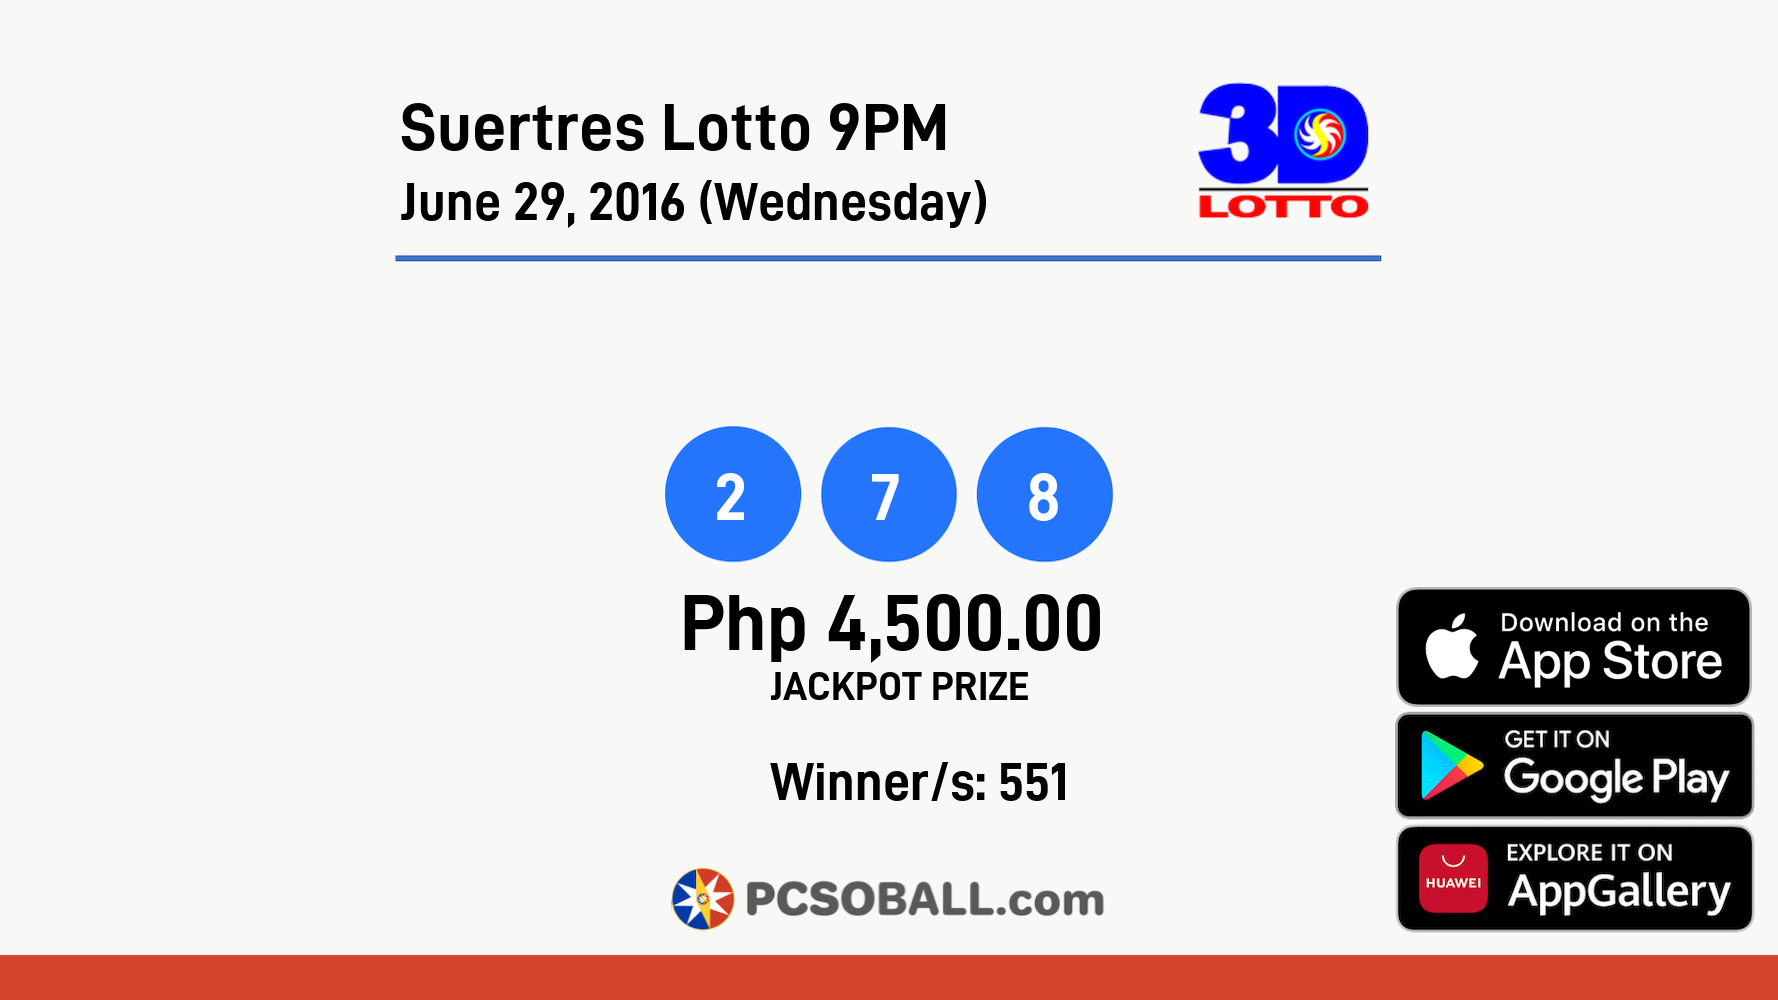 Suertres Lotto 9PM June 29, 2016 (Wednesday) Result